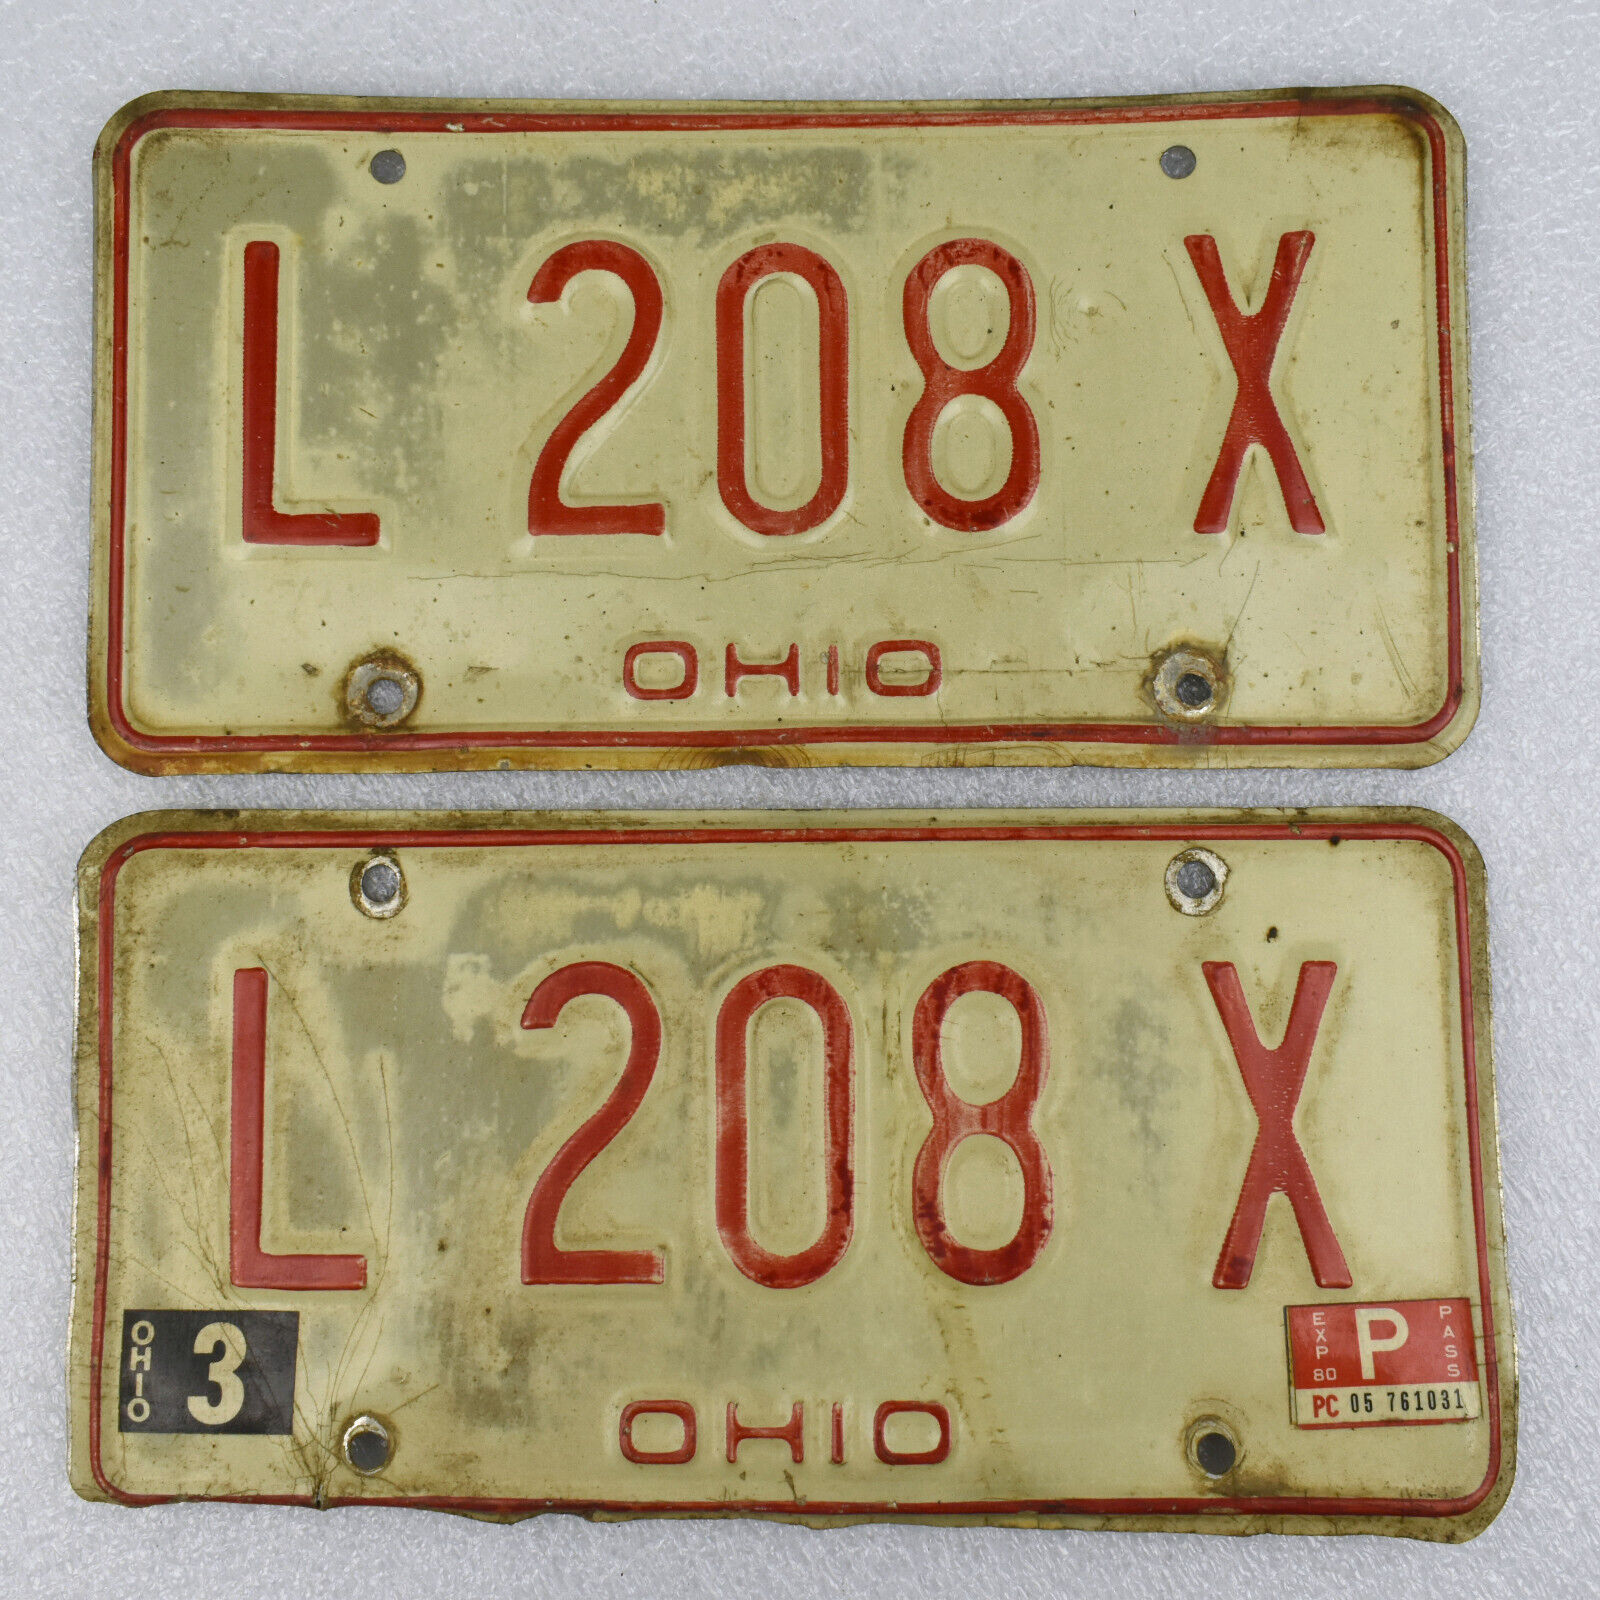 Vintage MATCHING PAIR 1976-1979 OHIO License Plates L-208-X Automobilia